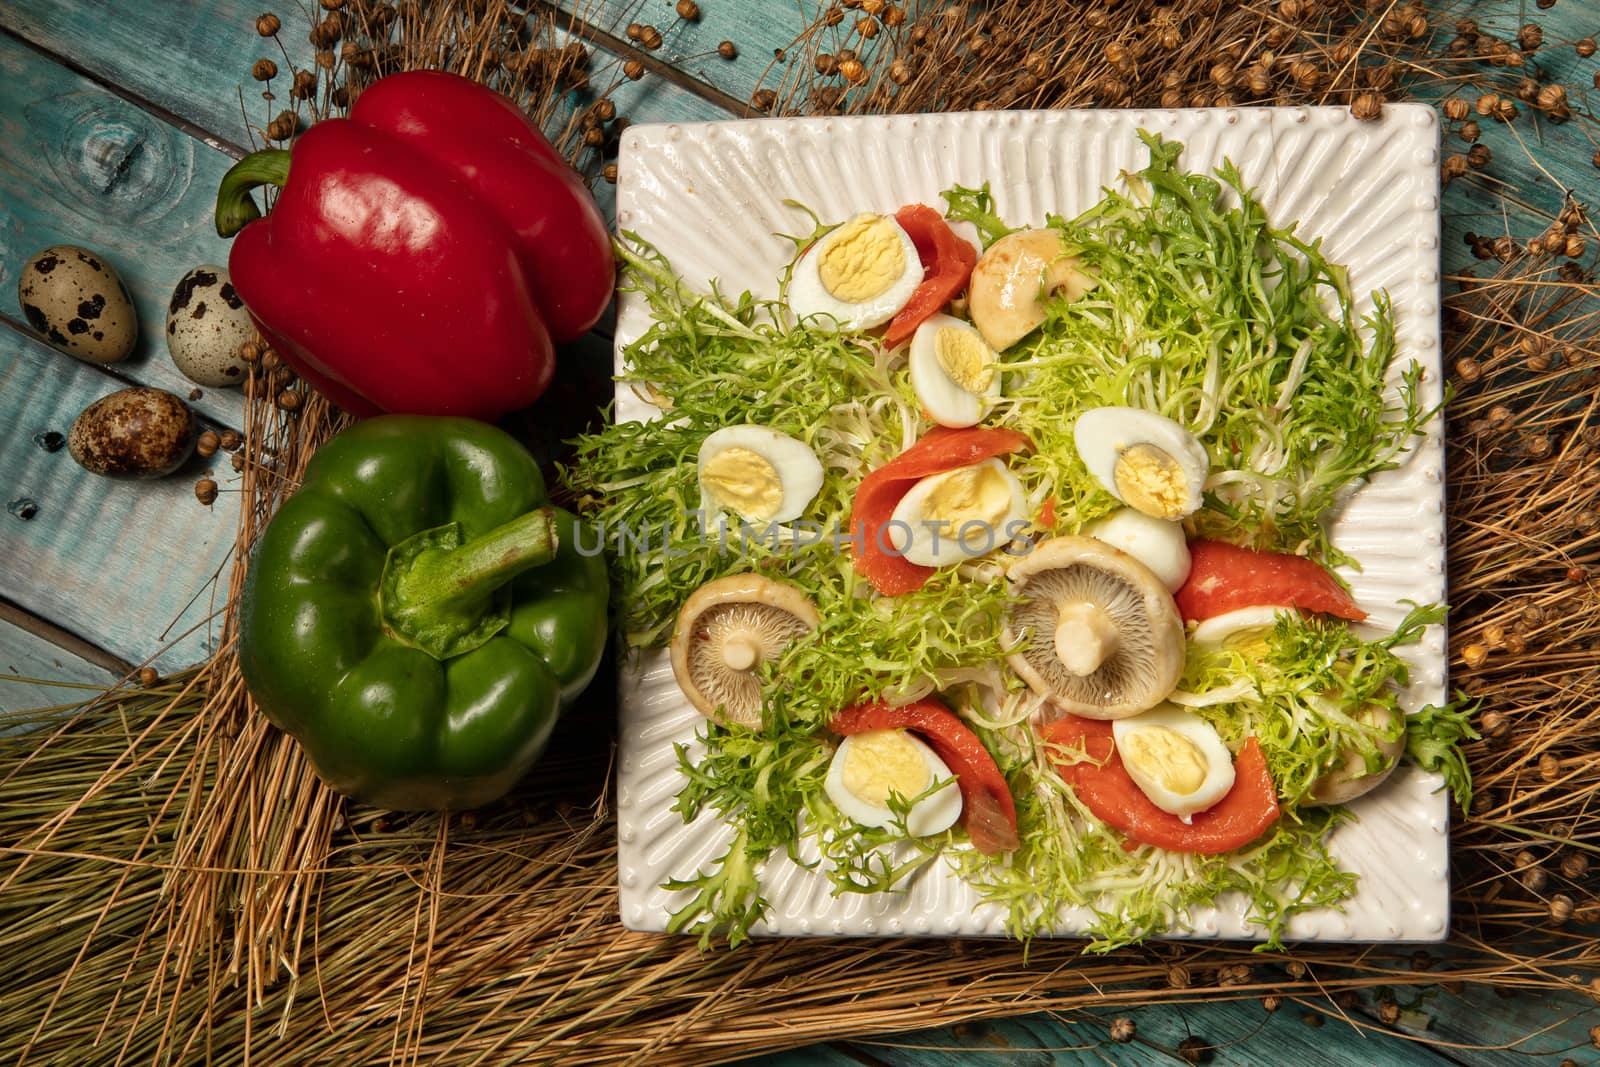 Salad WIth Mushrooms by Fotoskat